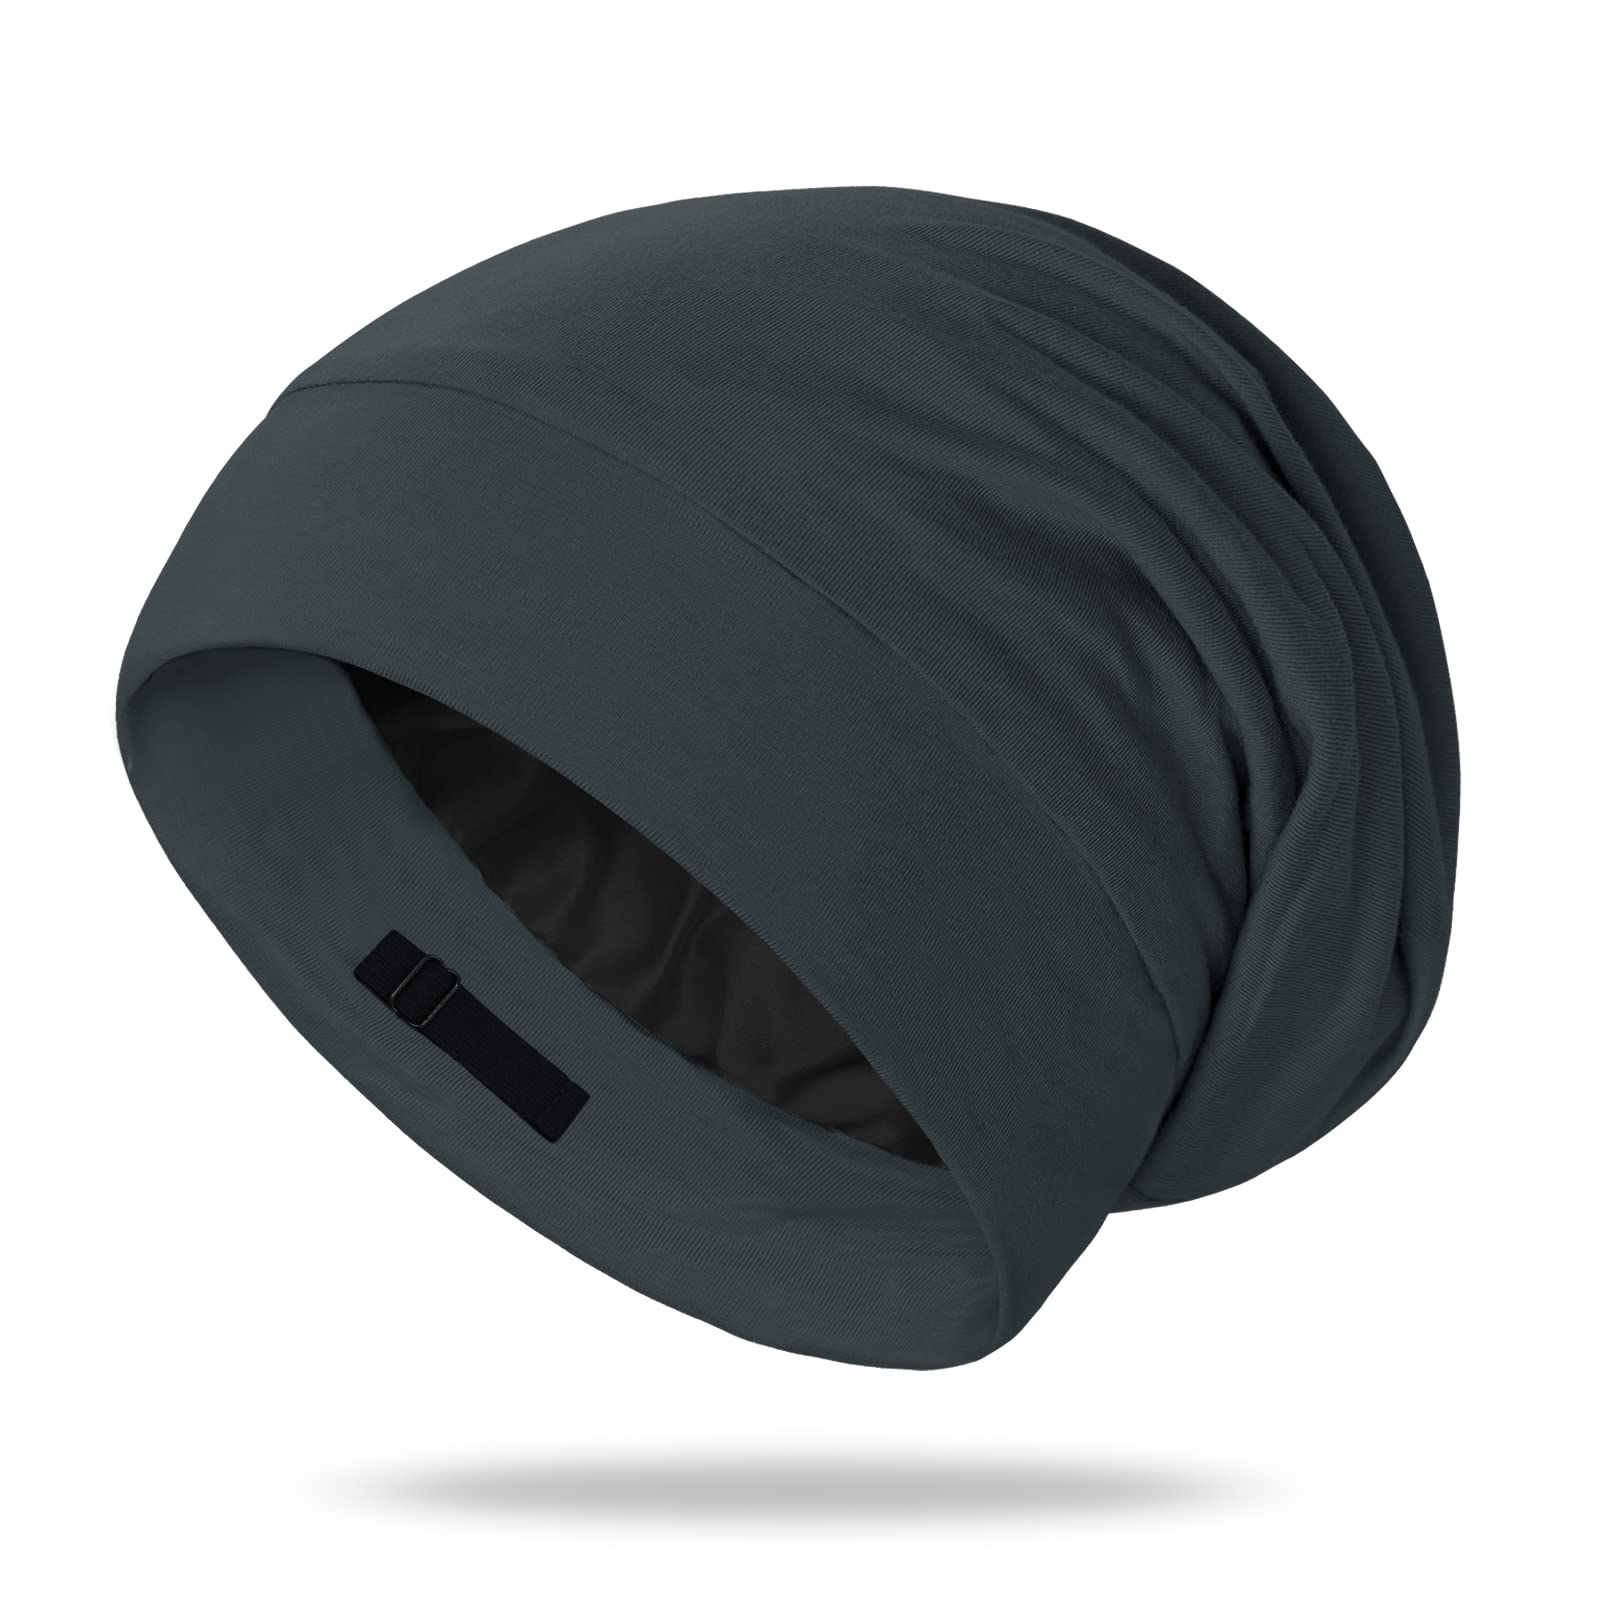 [LULUSILK] ナイトキャップ シルクナイトキャップ 帽子 メンズ レディース 19匁6Aシルク ロングヘア用 ヘアキャップ モダール 美髪